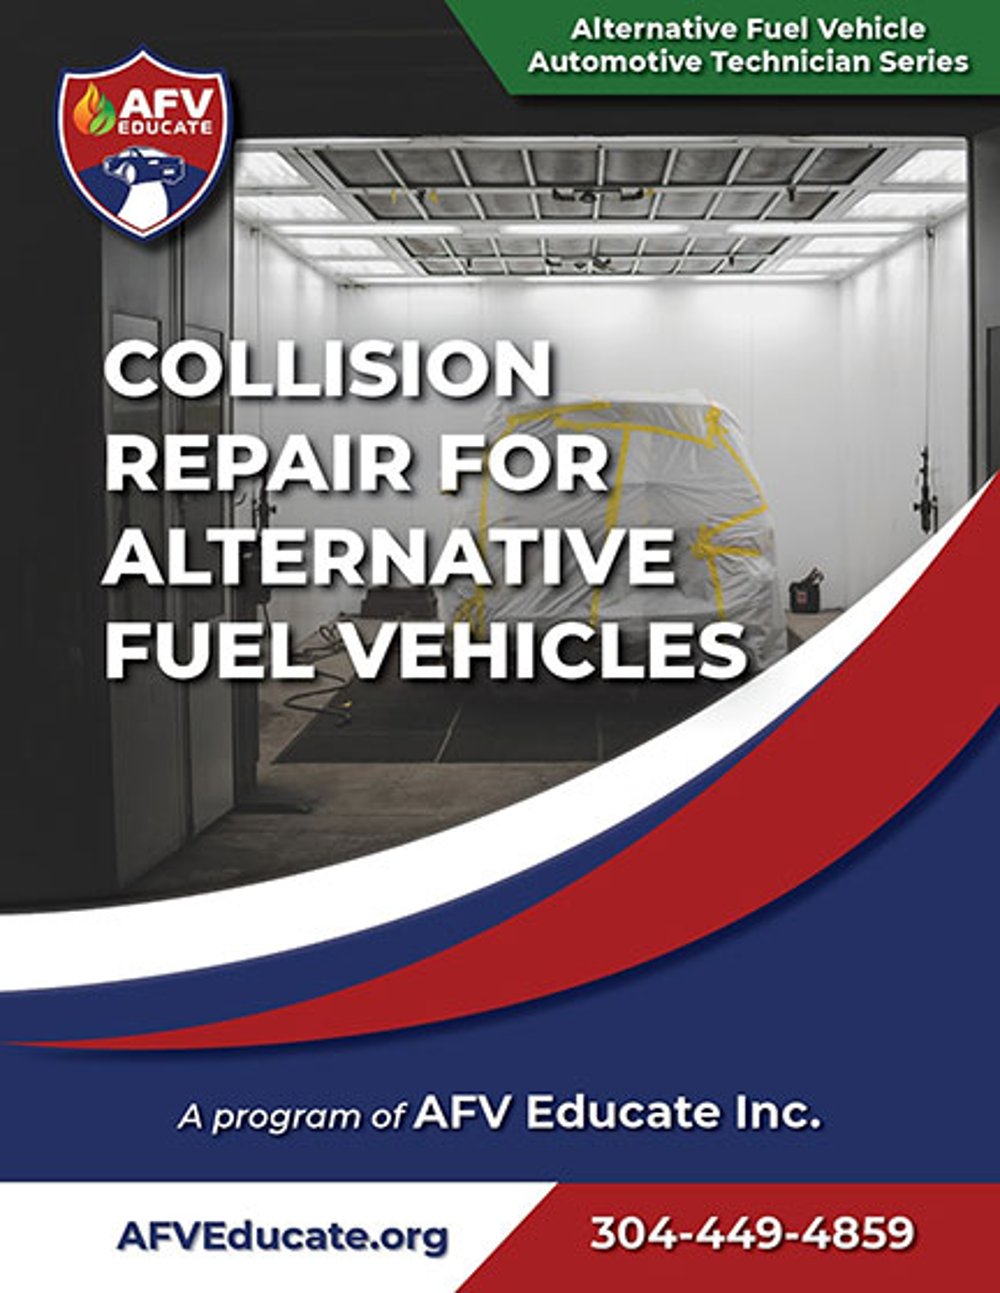 AFV Educate Collision Repair for Alternative Fuel Vehicles Manual